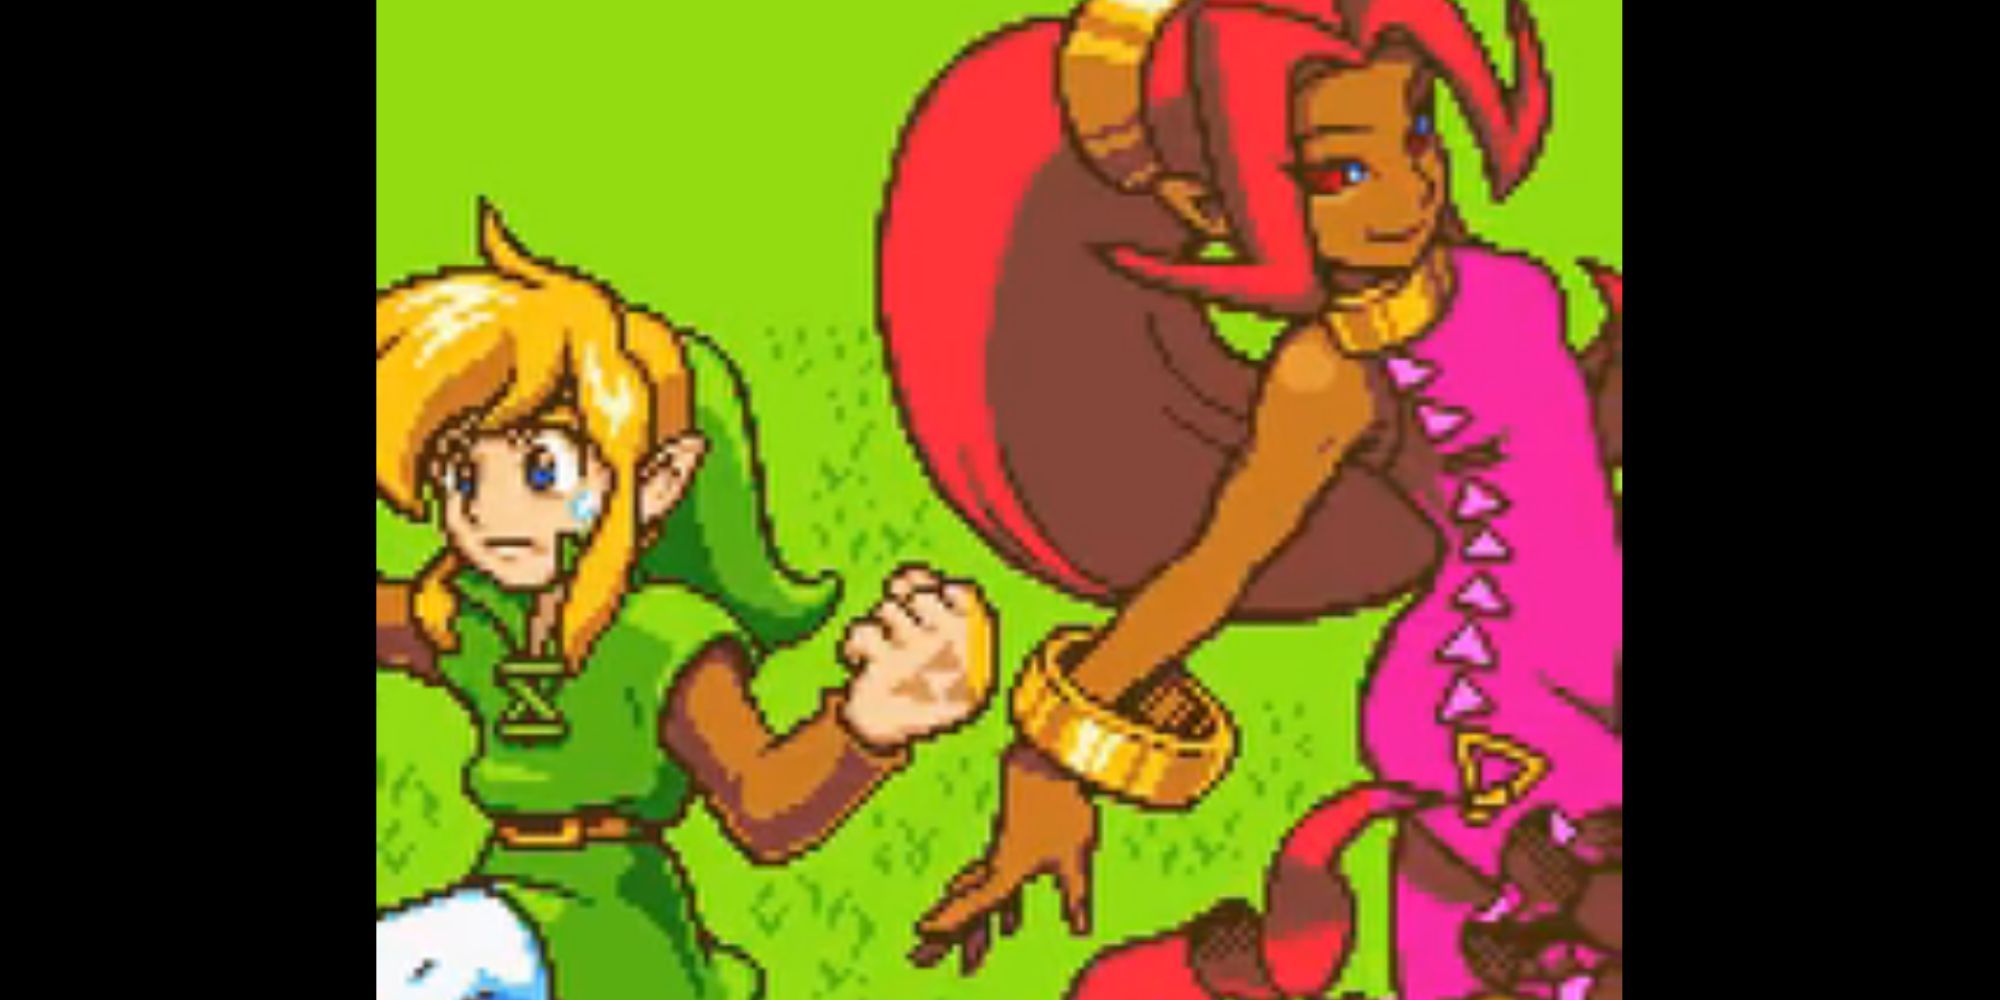 Link awkwardly dances beside Din